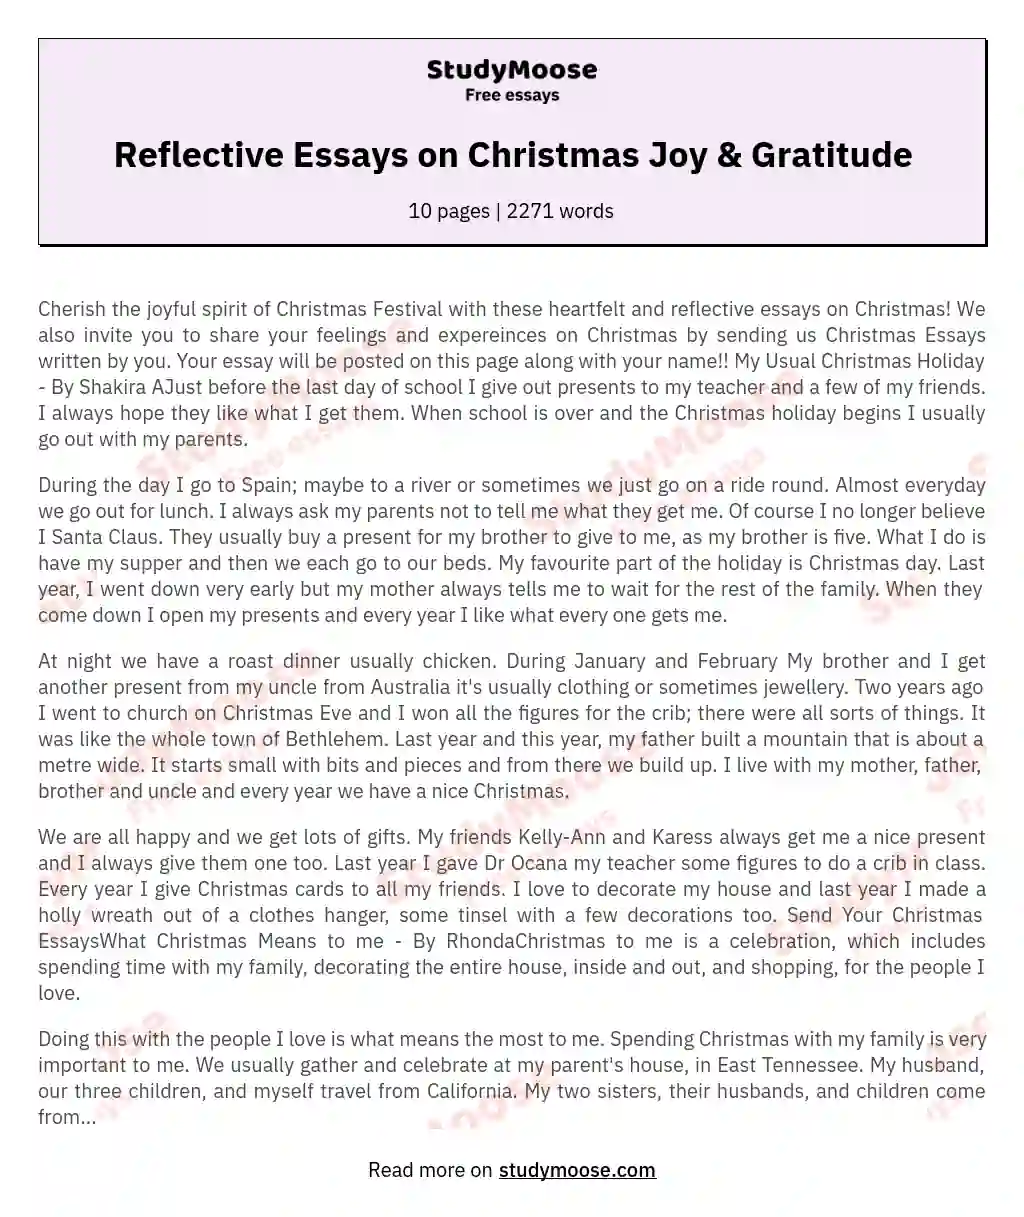 Reflective Essays on Christmas Joy & Gratitude essay